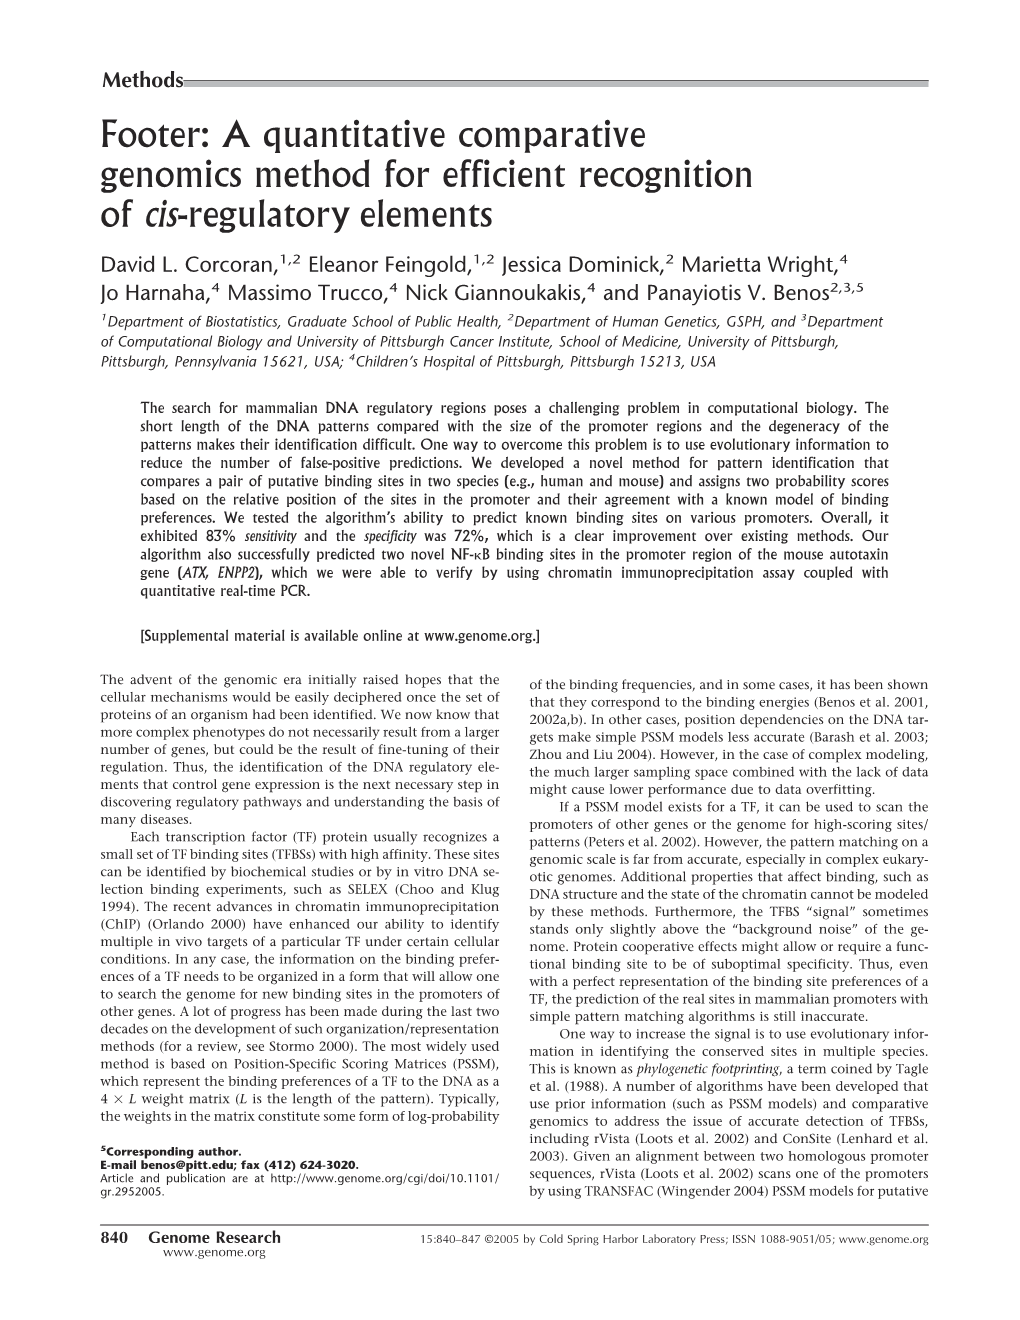 Footer: a Quantitative Comparative Genomics Method for Efficient Recognition of Cis-Regulatory Elements